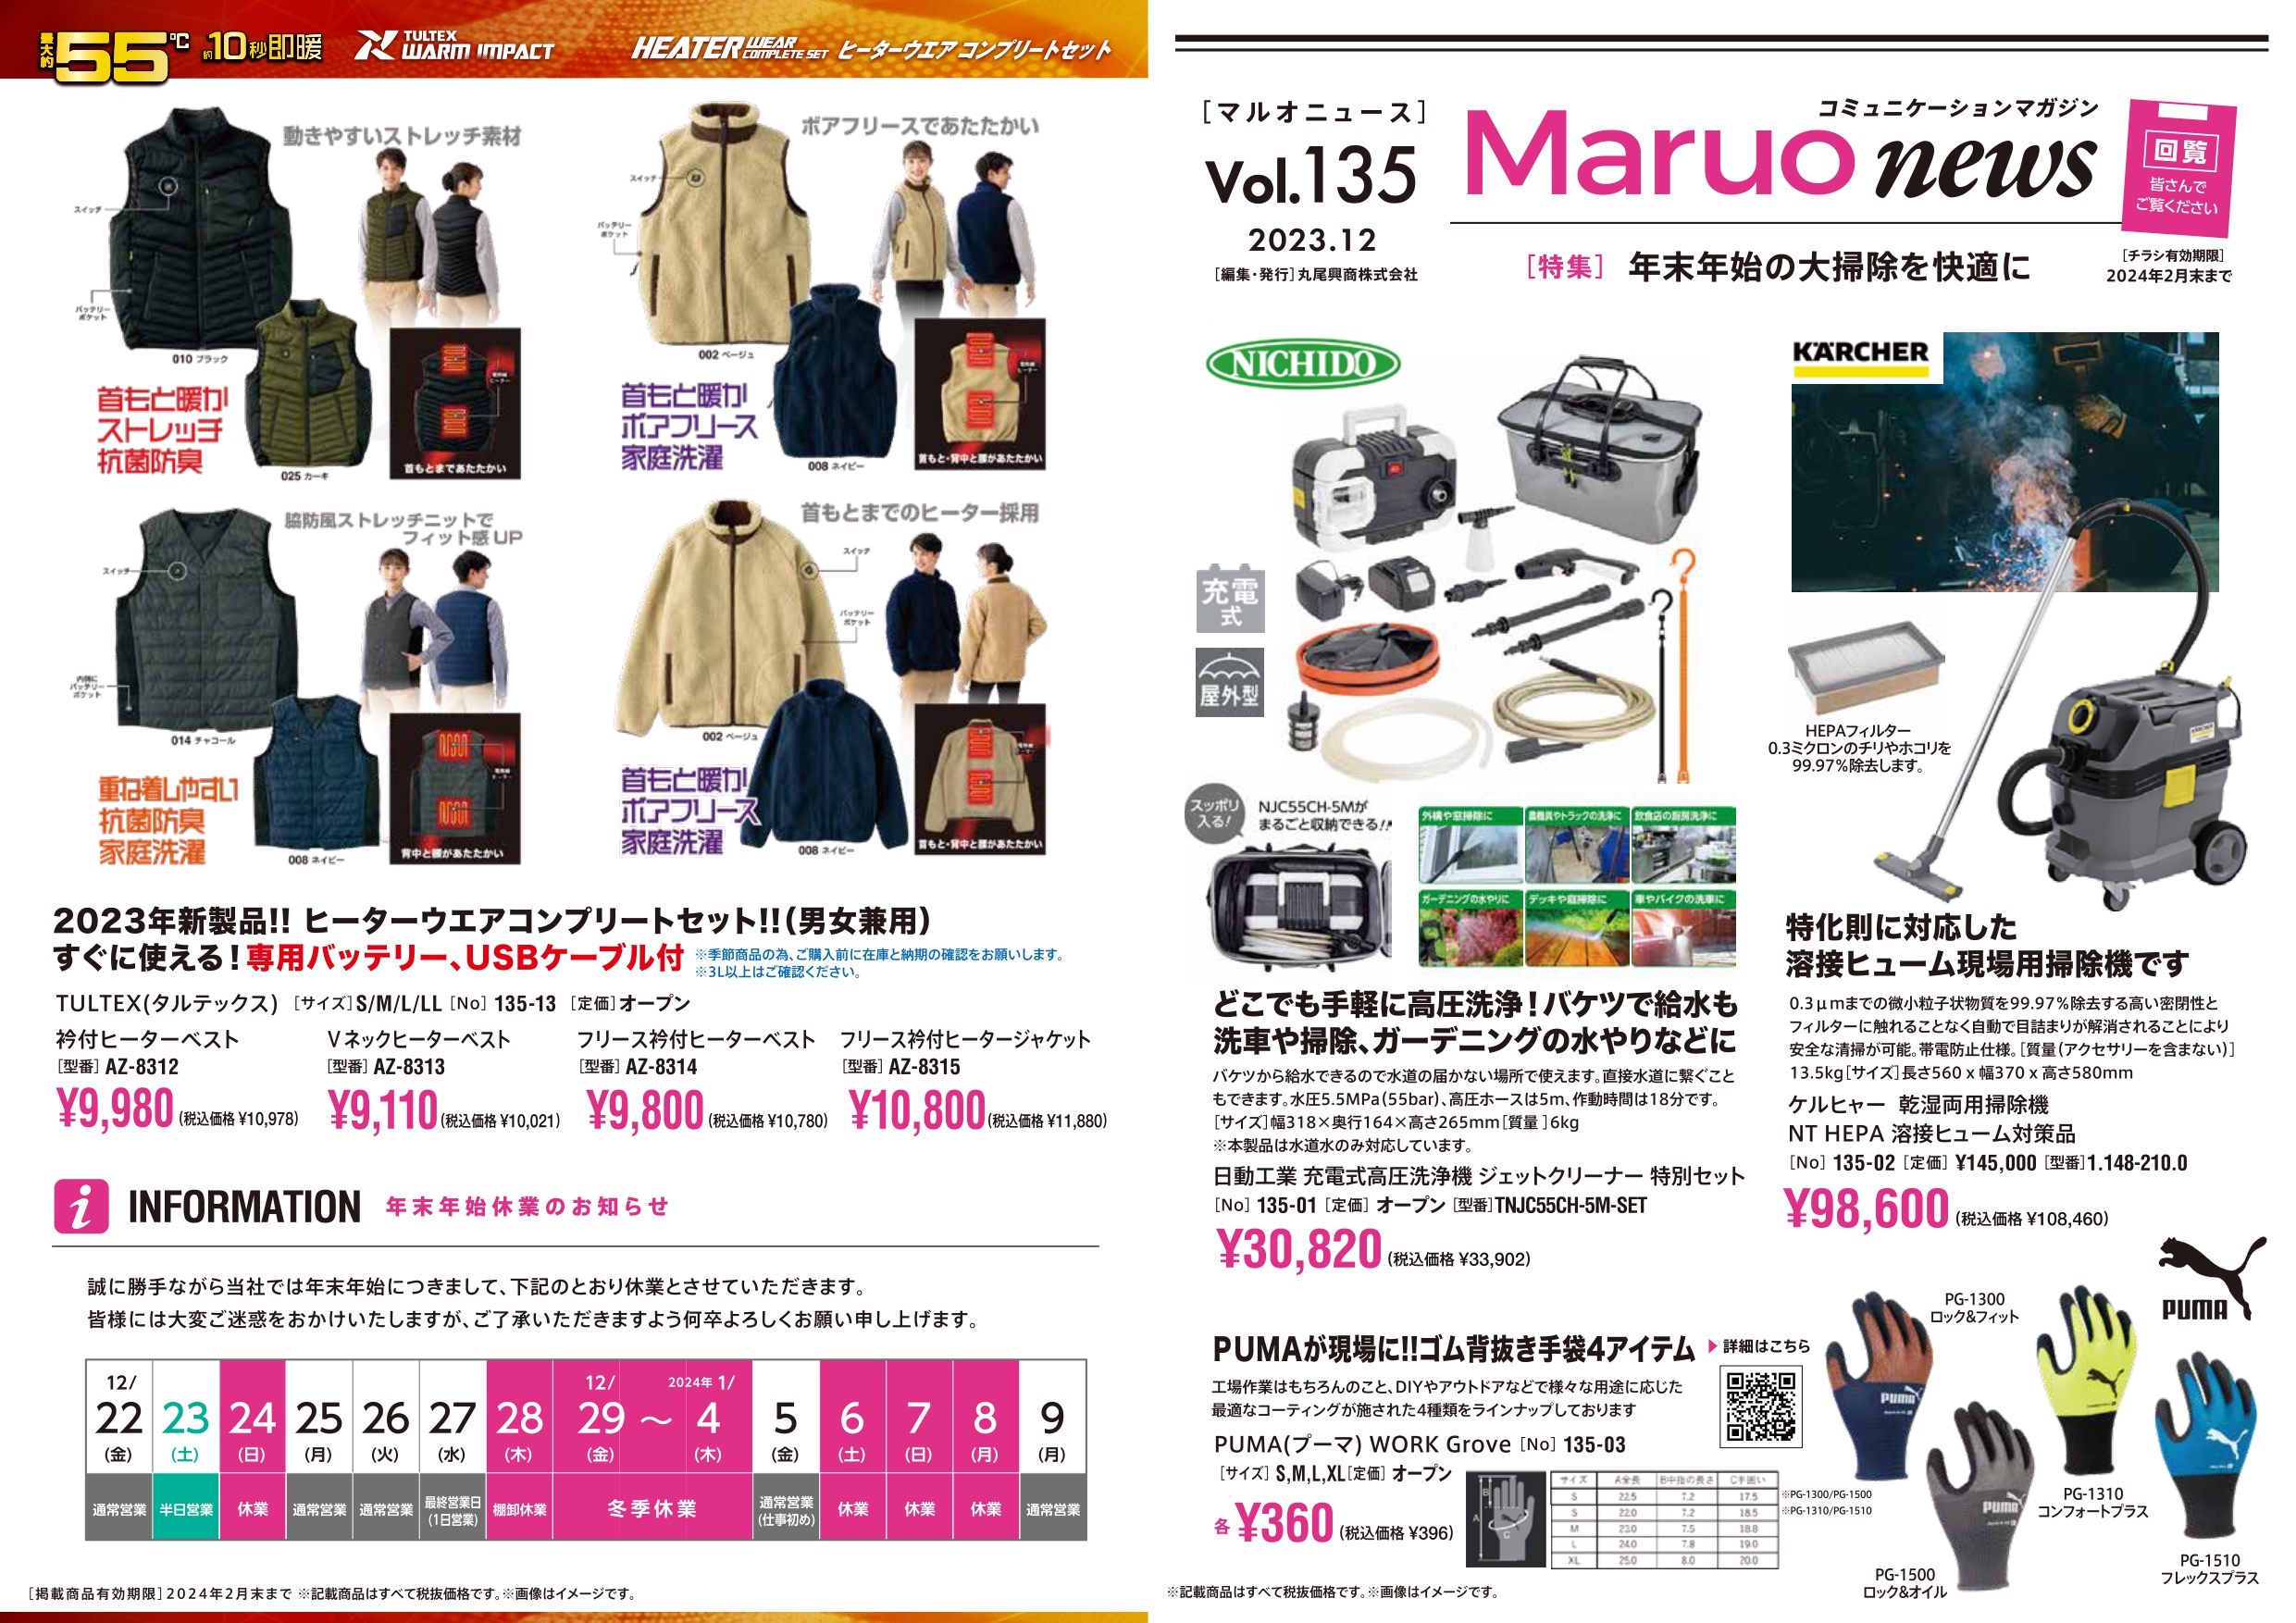 Maruo news Vol.135 松井トーヨー住建のイベントキャンペーン 写真1